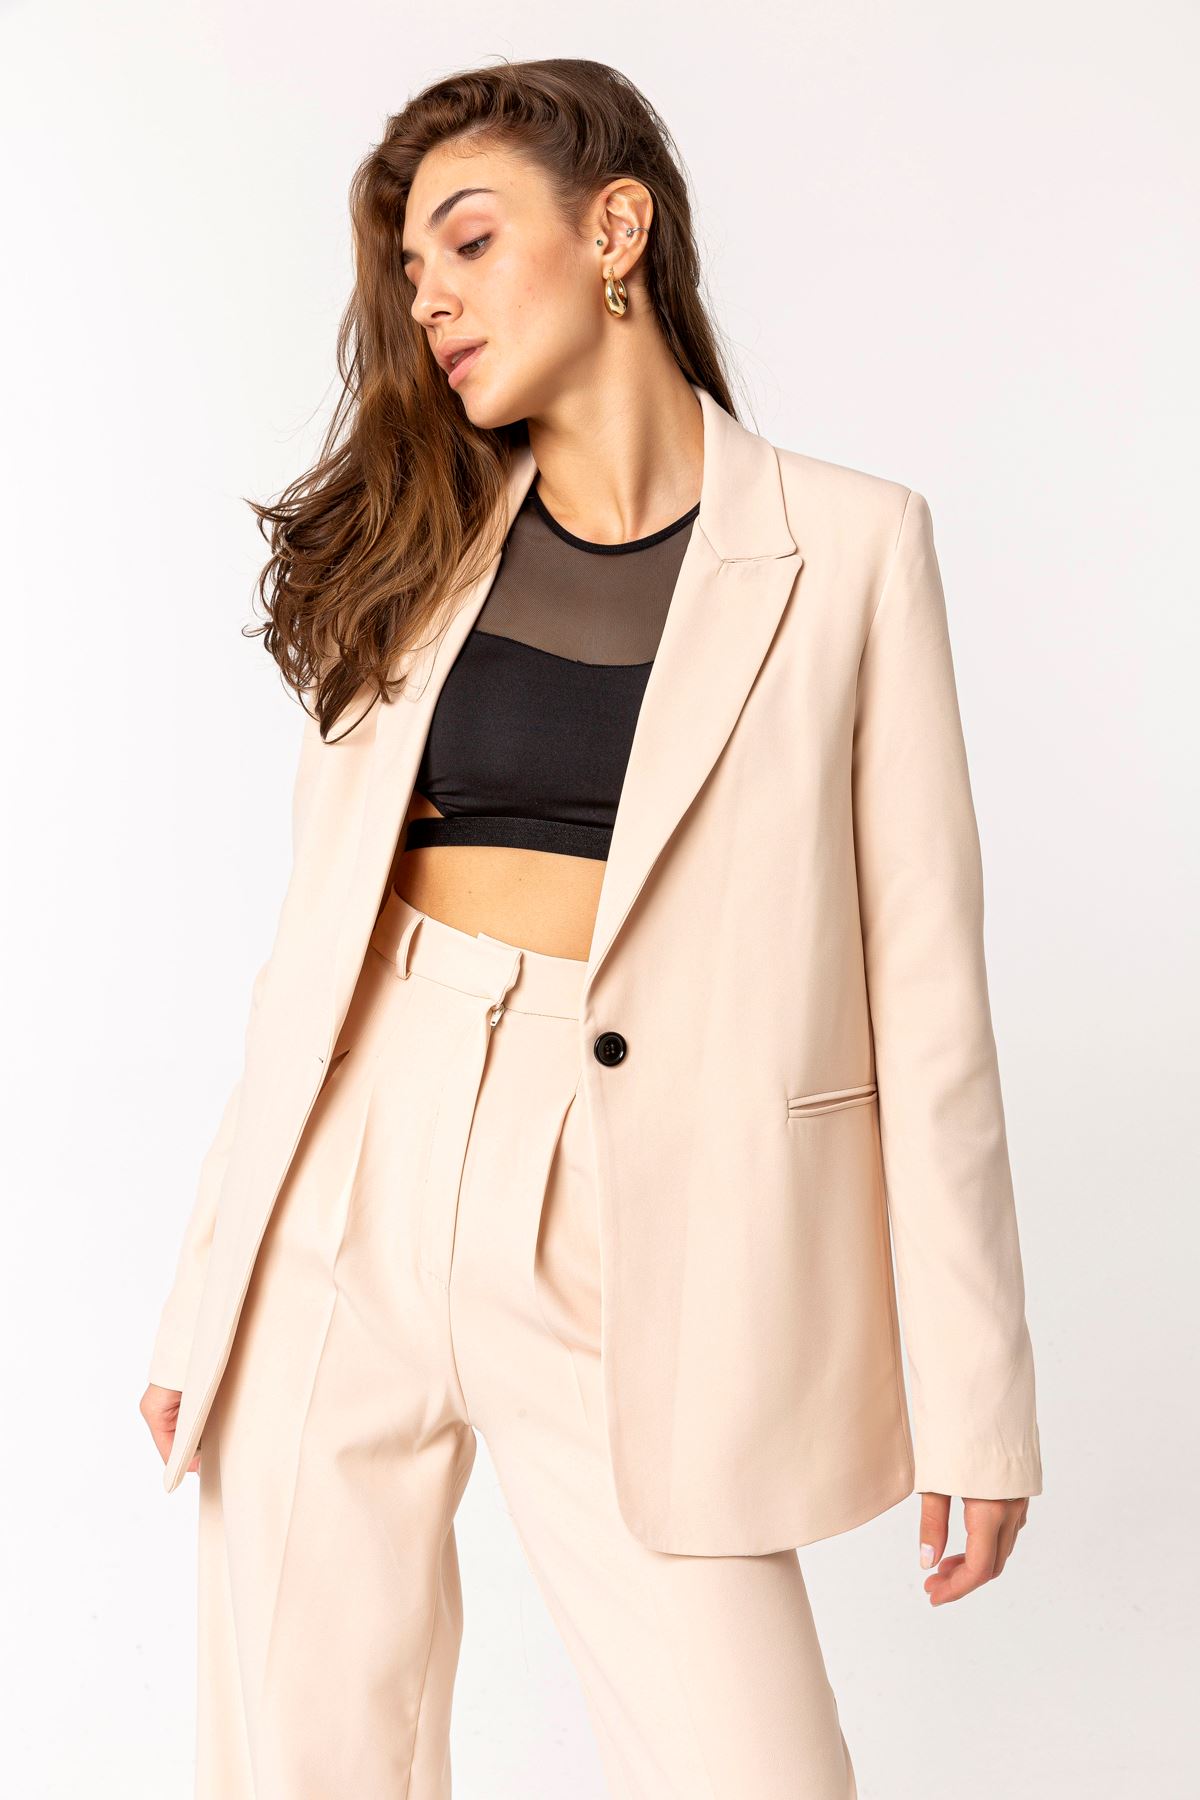 Atlas Fabric Revere Collar Below Hip Classical Single Button Women Jacket - Beige 